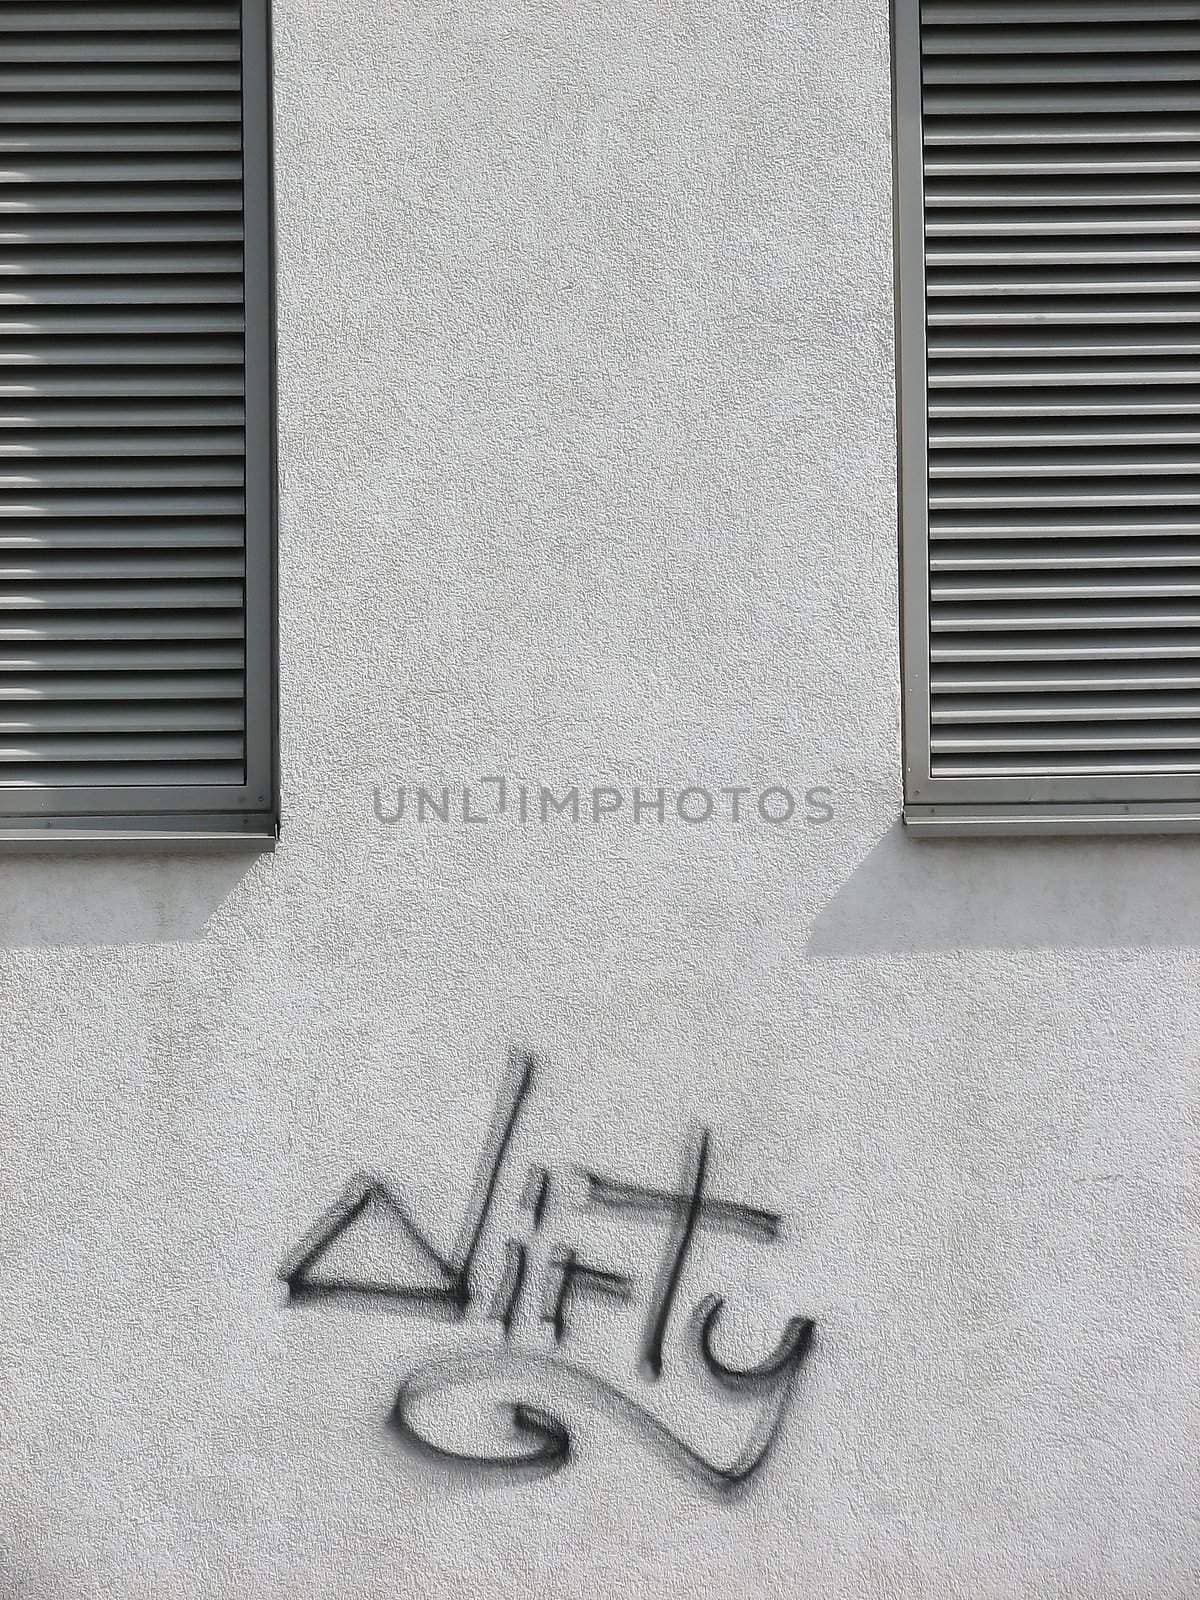 Graffiti 'dirty' written on a clean wall